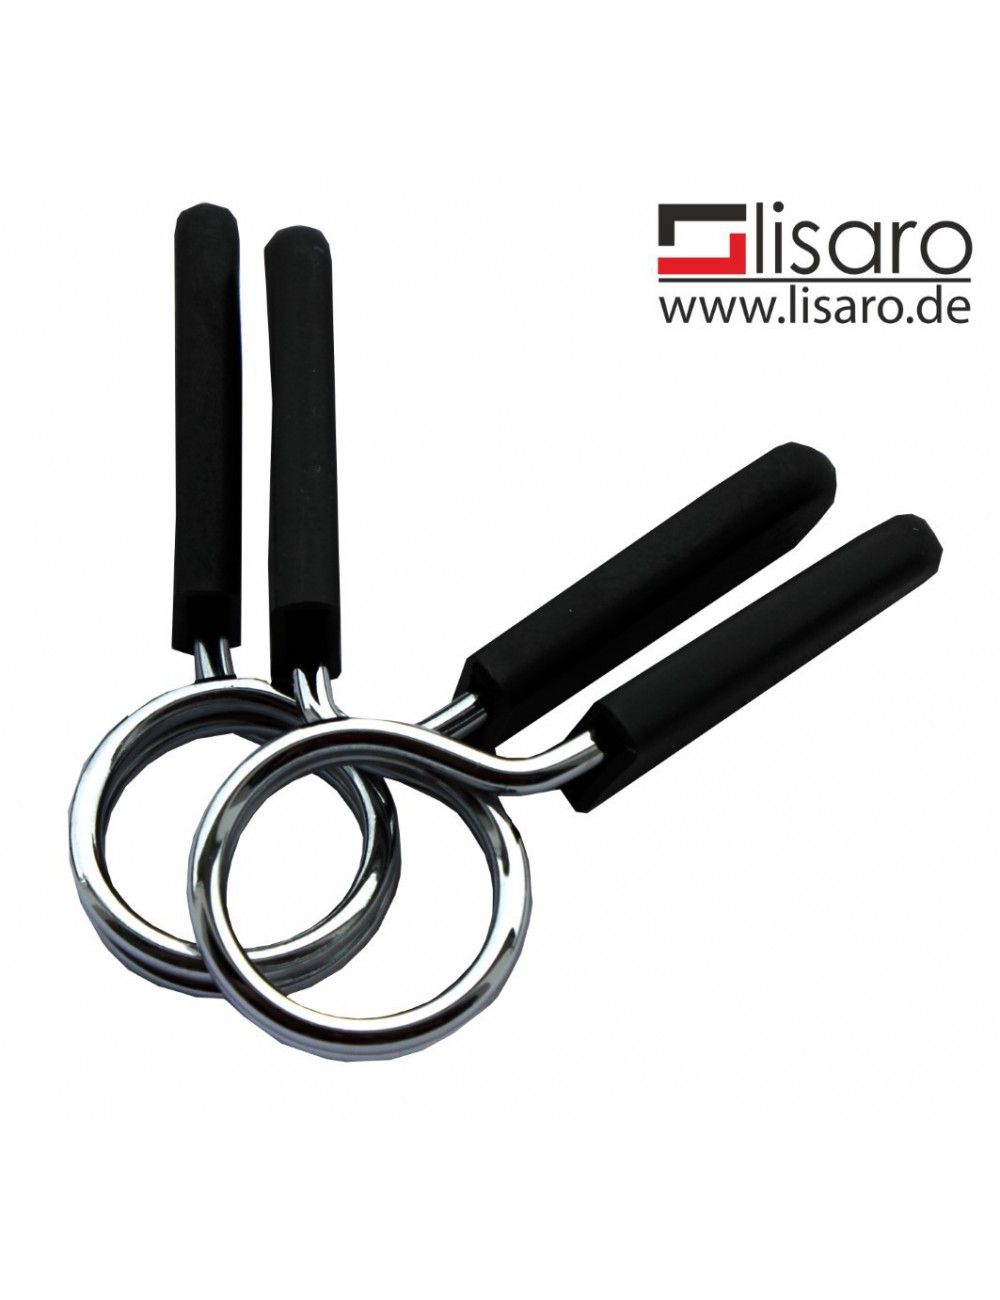 Lisaro Federverschluss/Spring Collar - 1